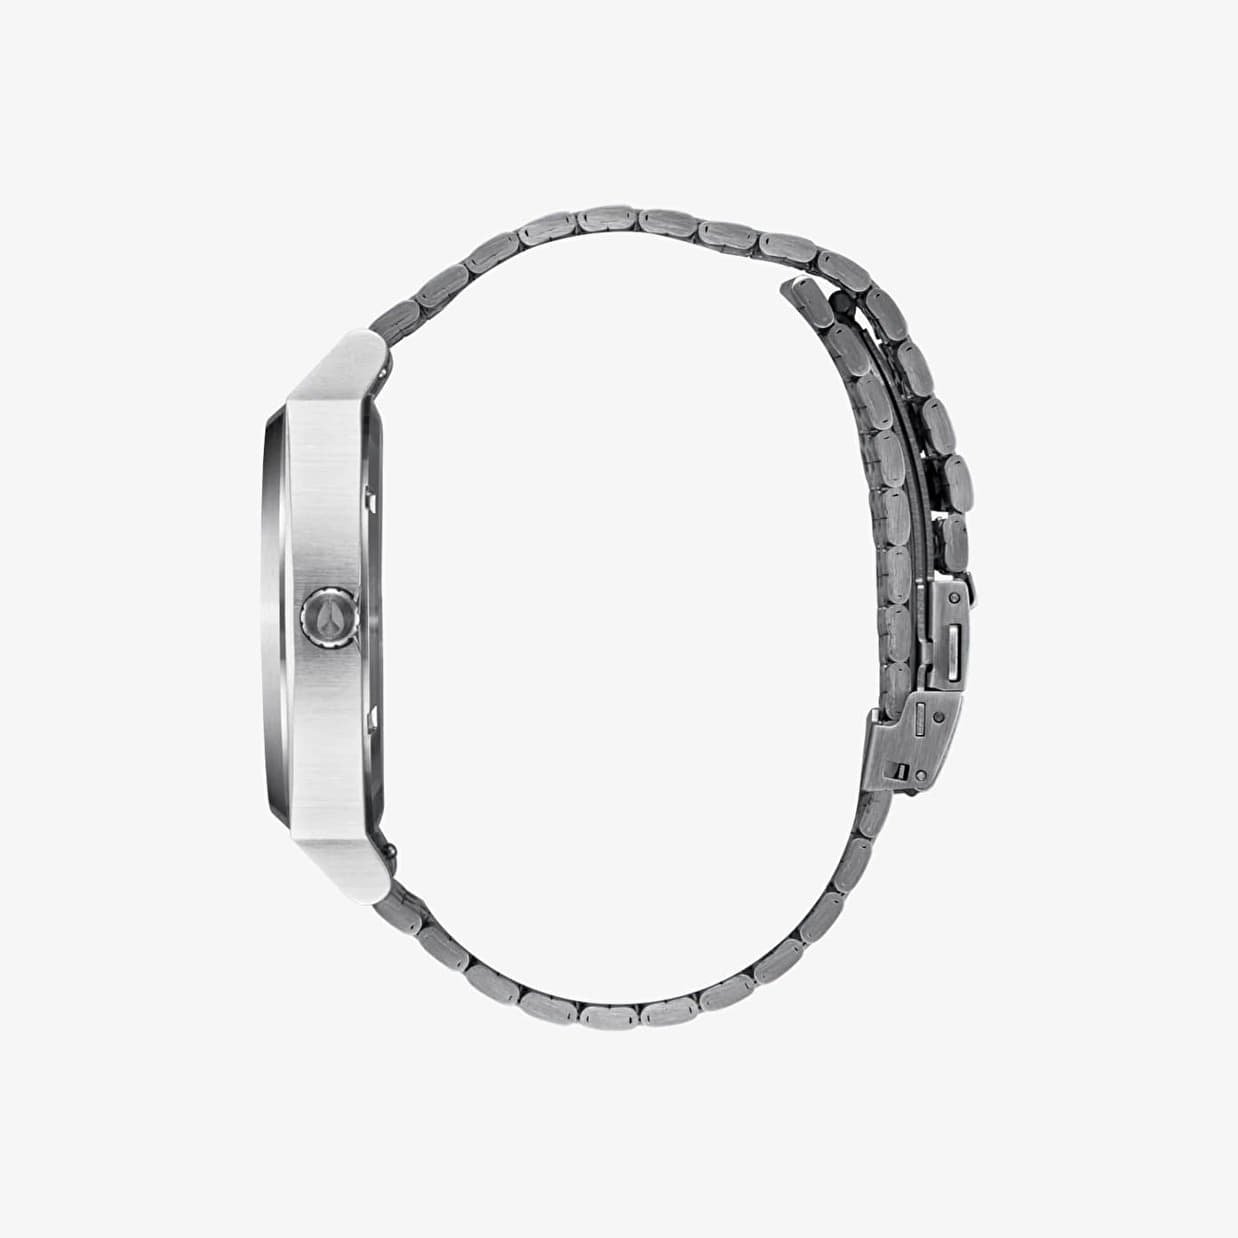 Time Teller Solar Watch Silver/ Jade Sunray